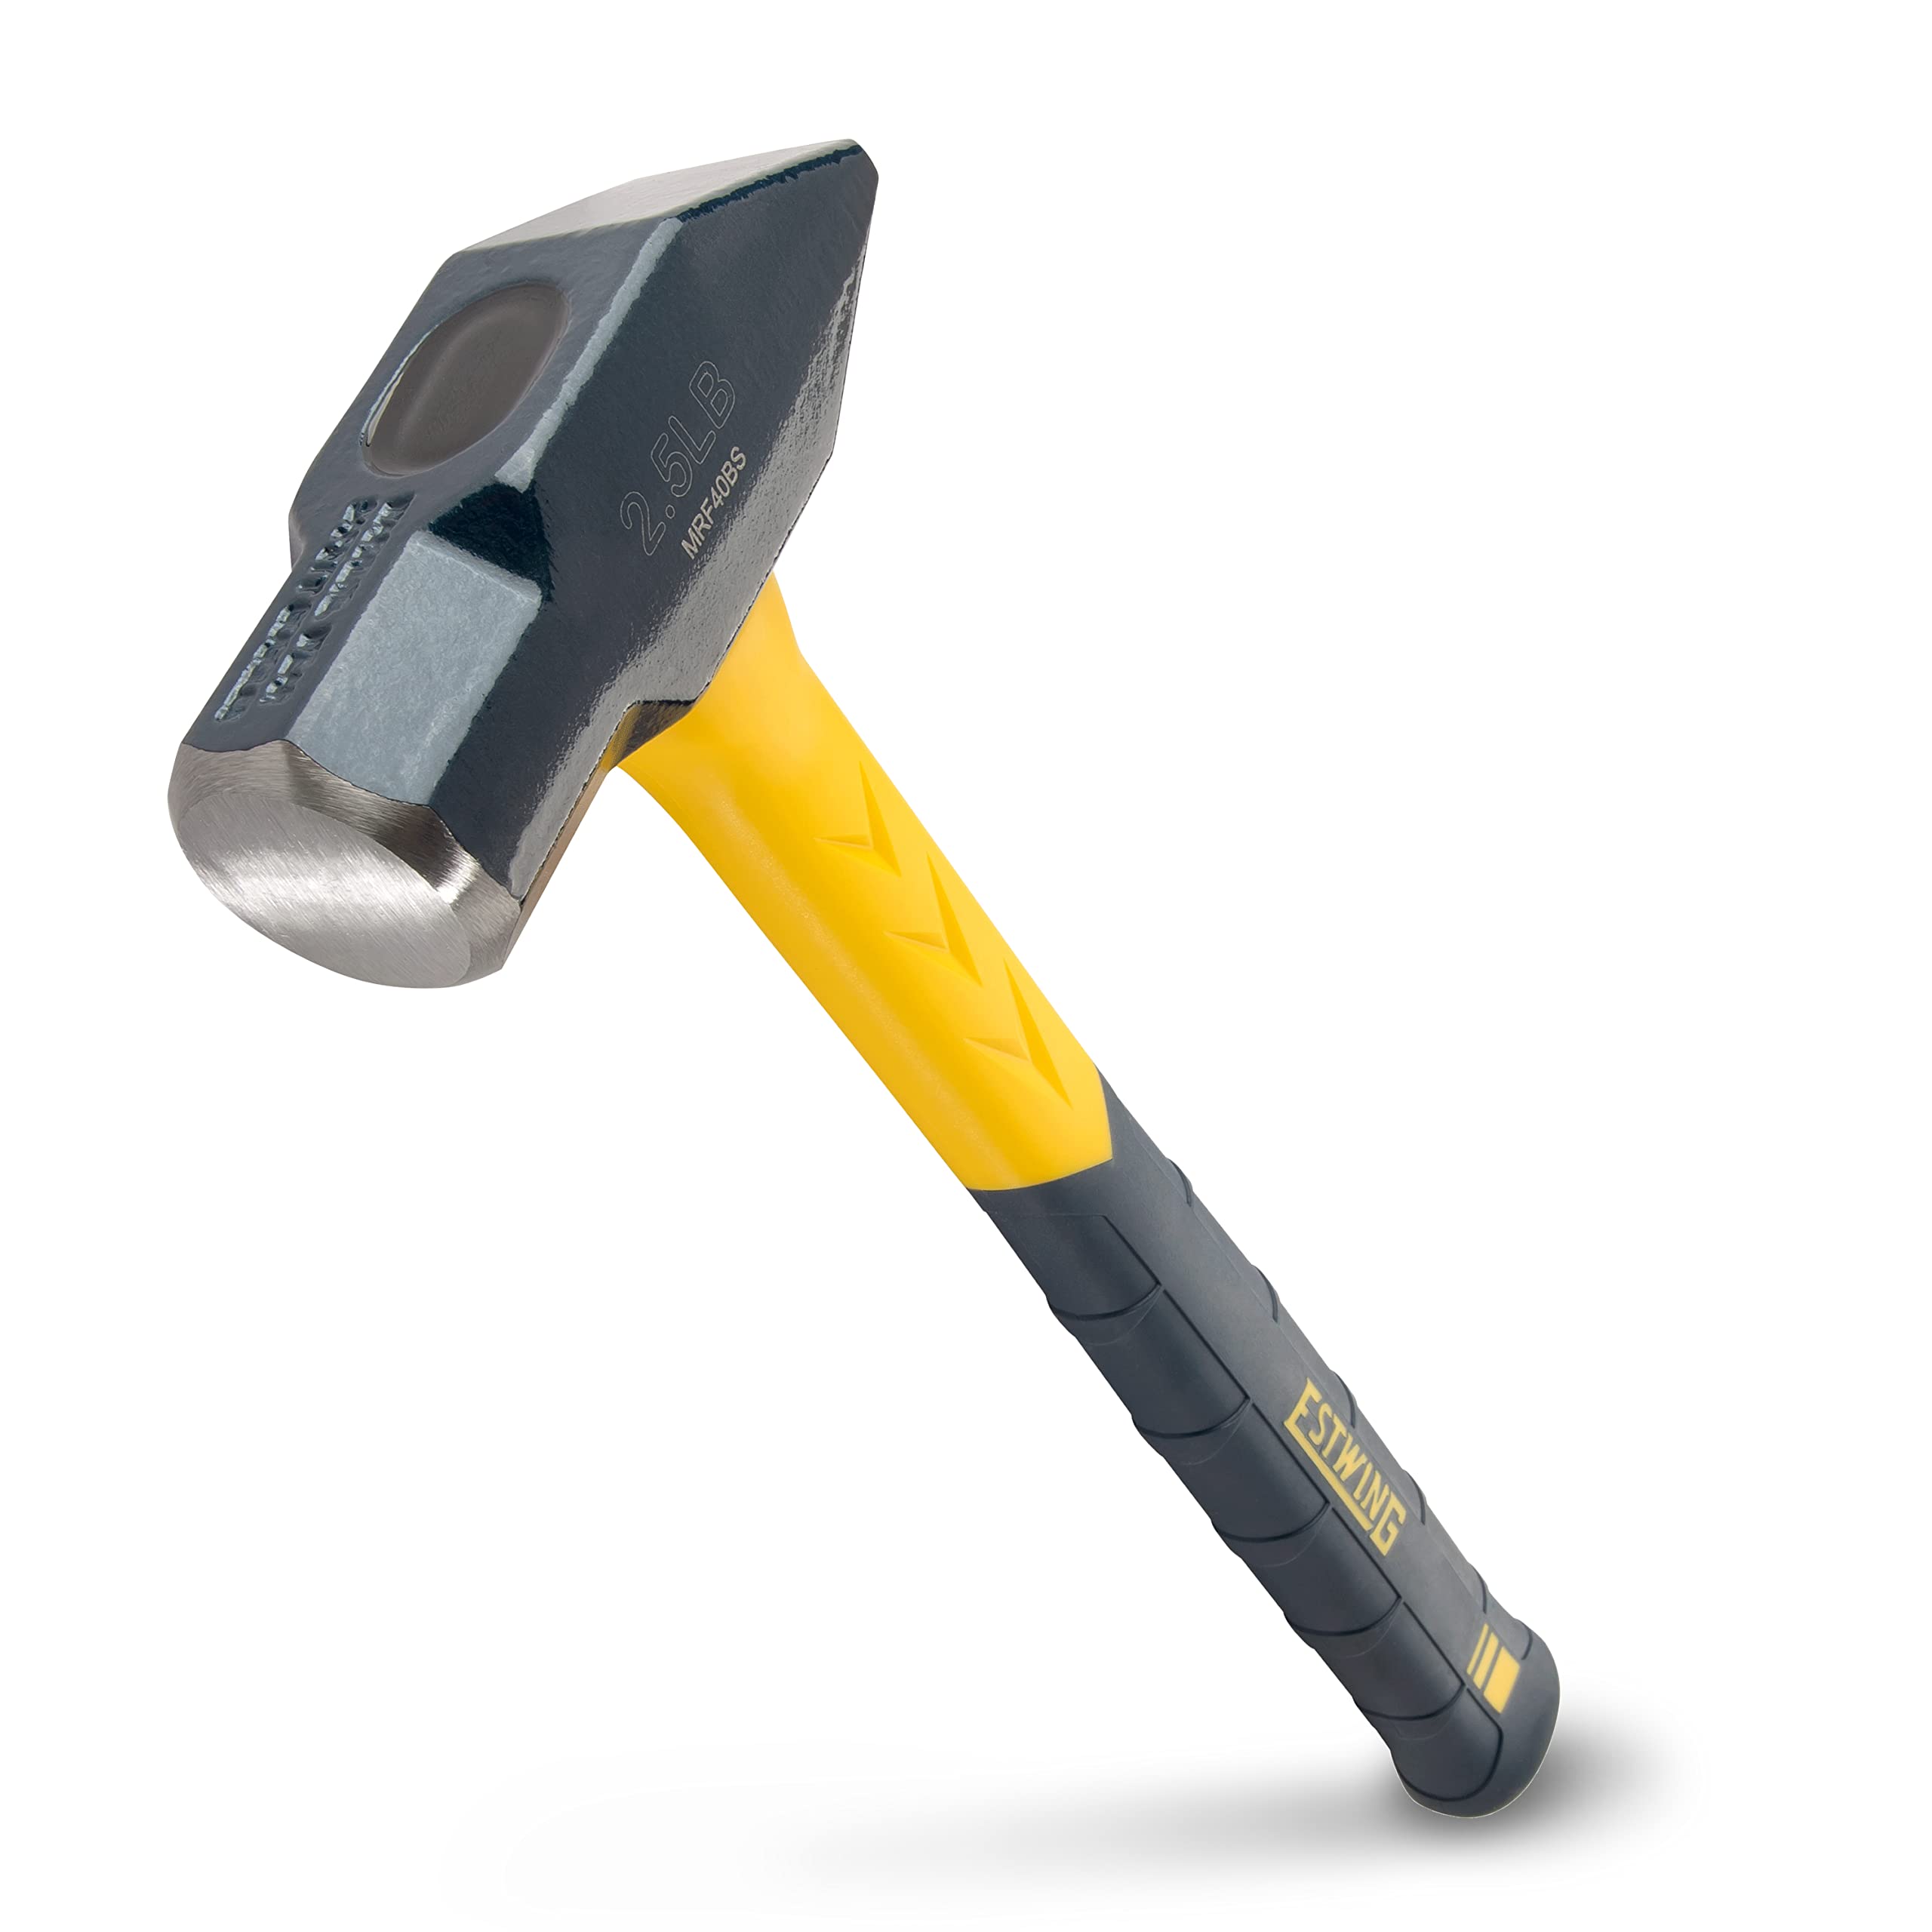 Estwing - MRF4OBS Sure Strike Blacksmith's Hammer - 40 oz Metalworking Tool with Fiberglass Handle & No-Slip Cushion Grip - Amazon - $19.98